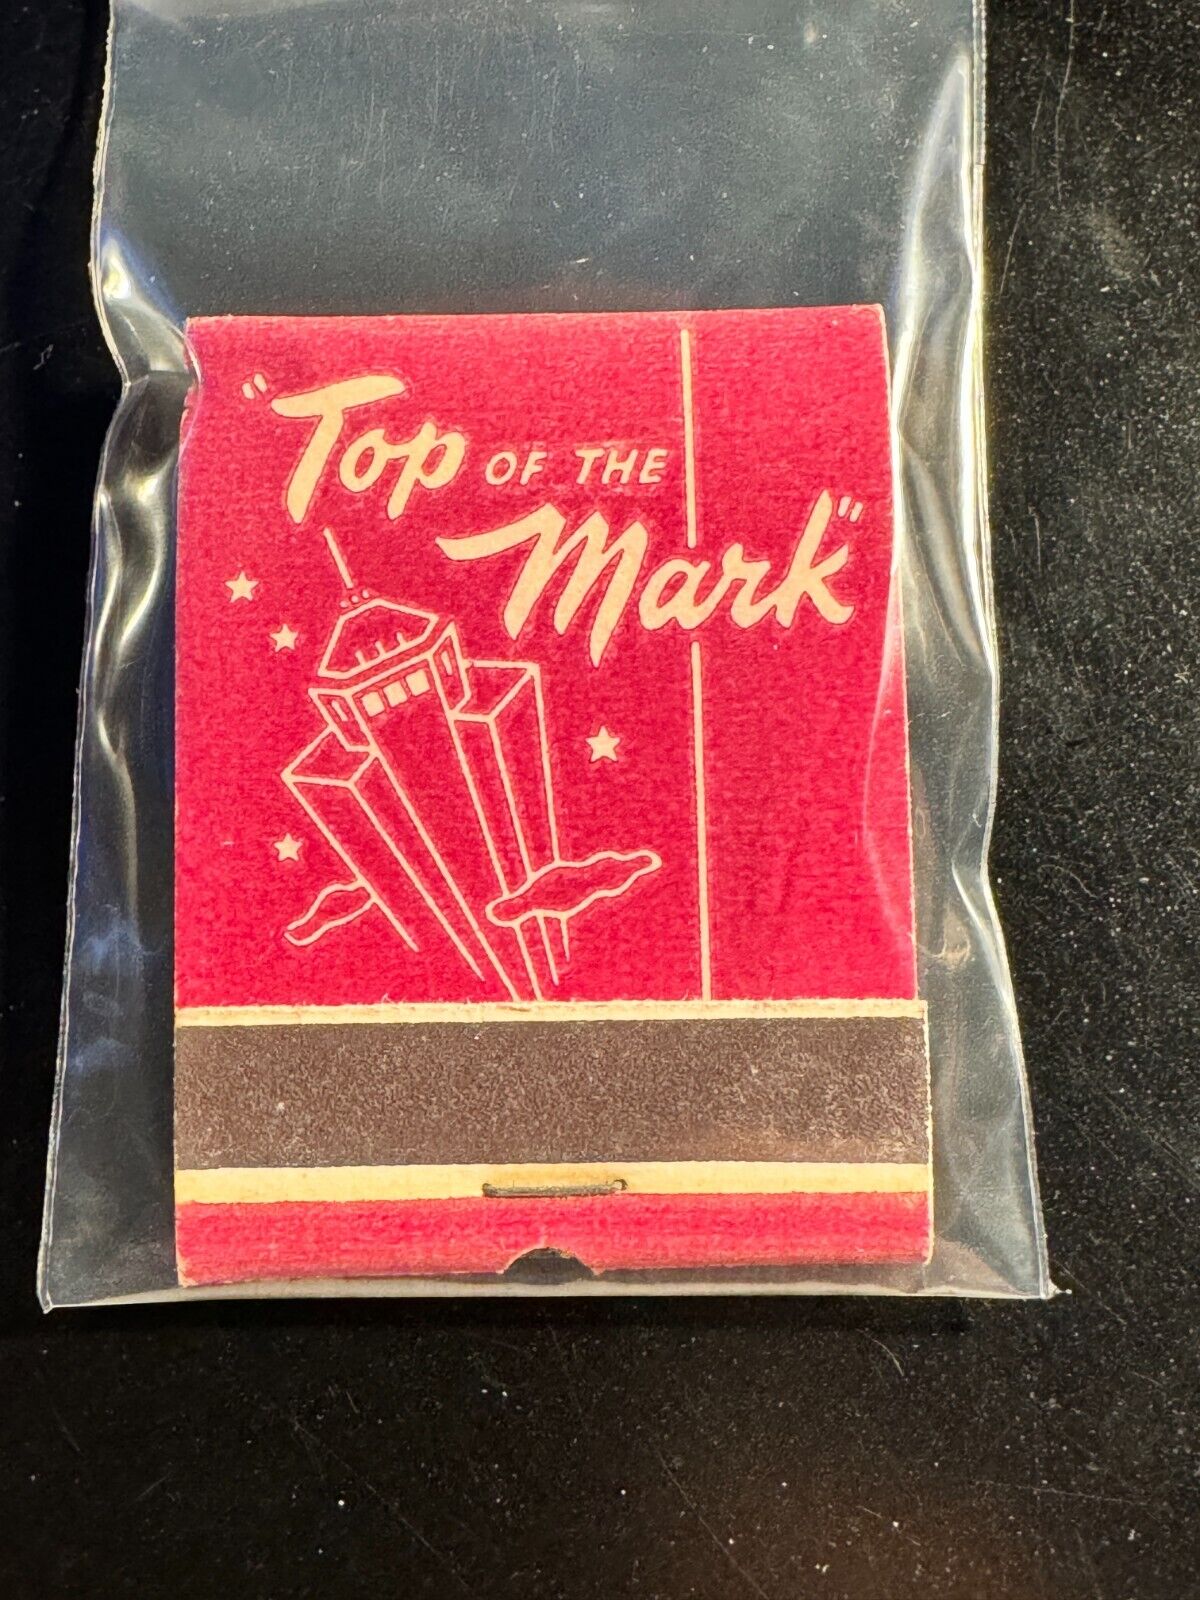 MATCHBOOK - TOP OF THE MARK - HOTEL MARK HOPKINS - SAN FRANCISCO, CA - UNSTRUCK